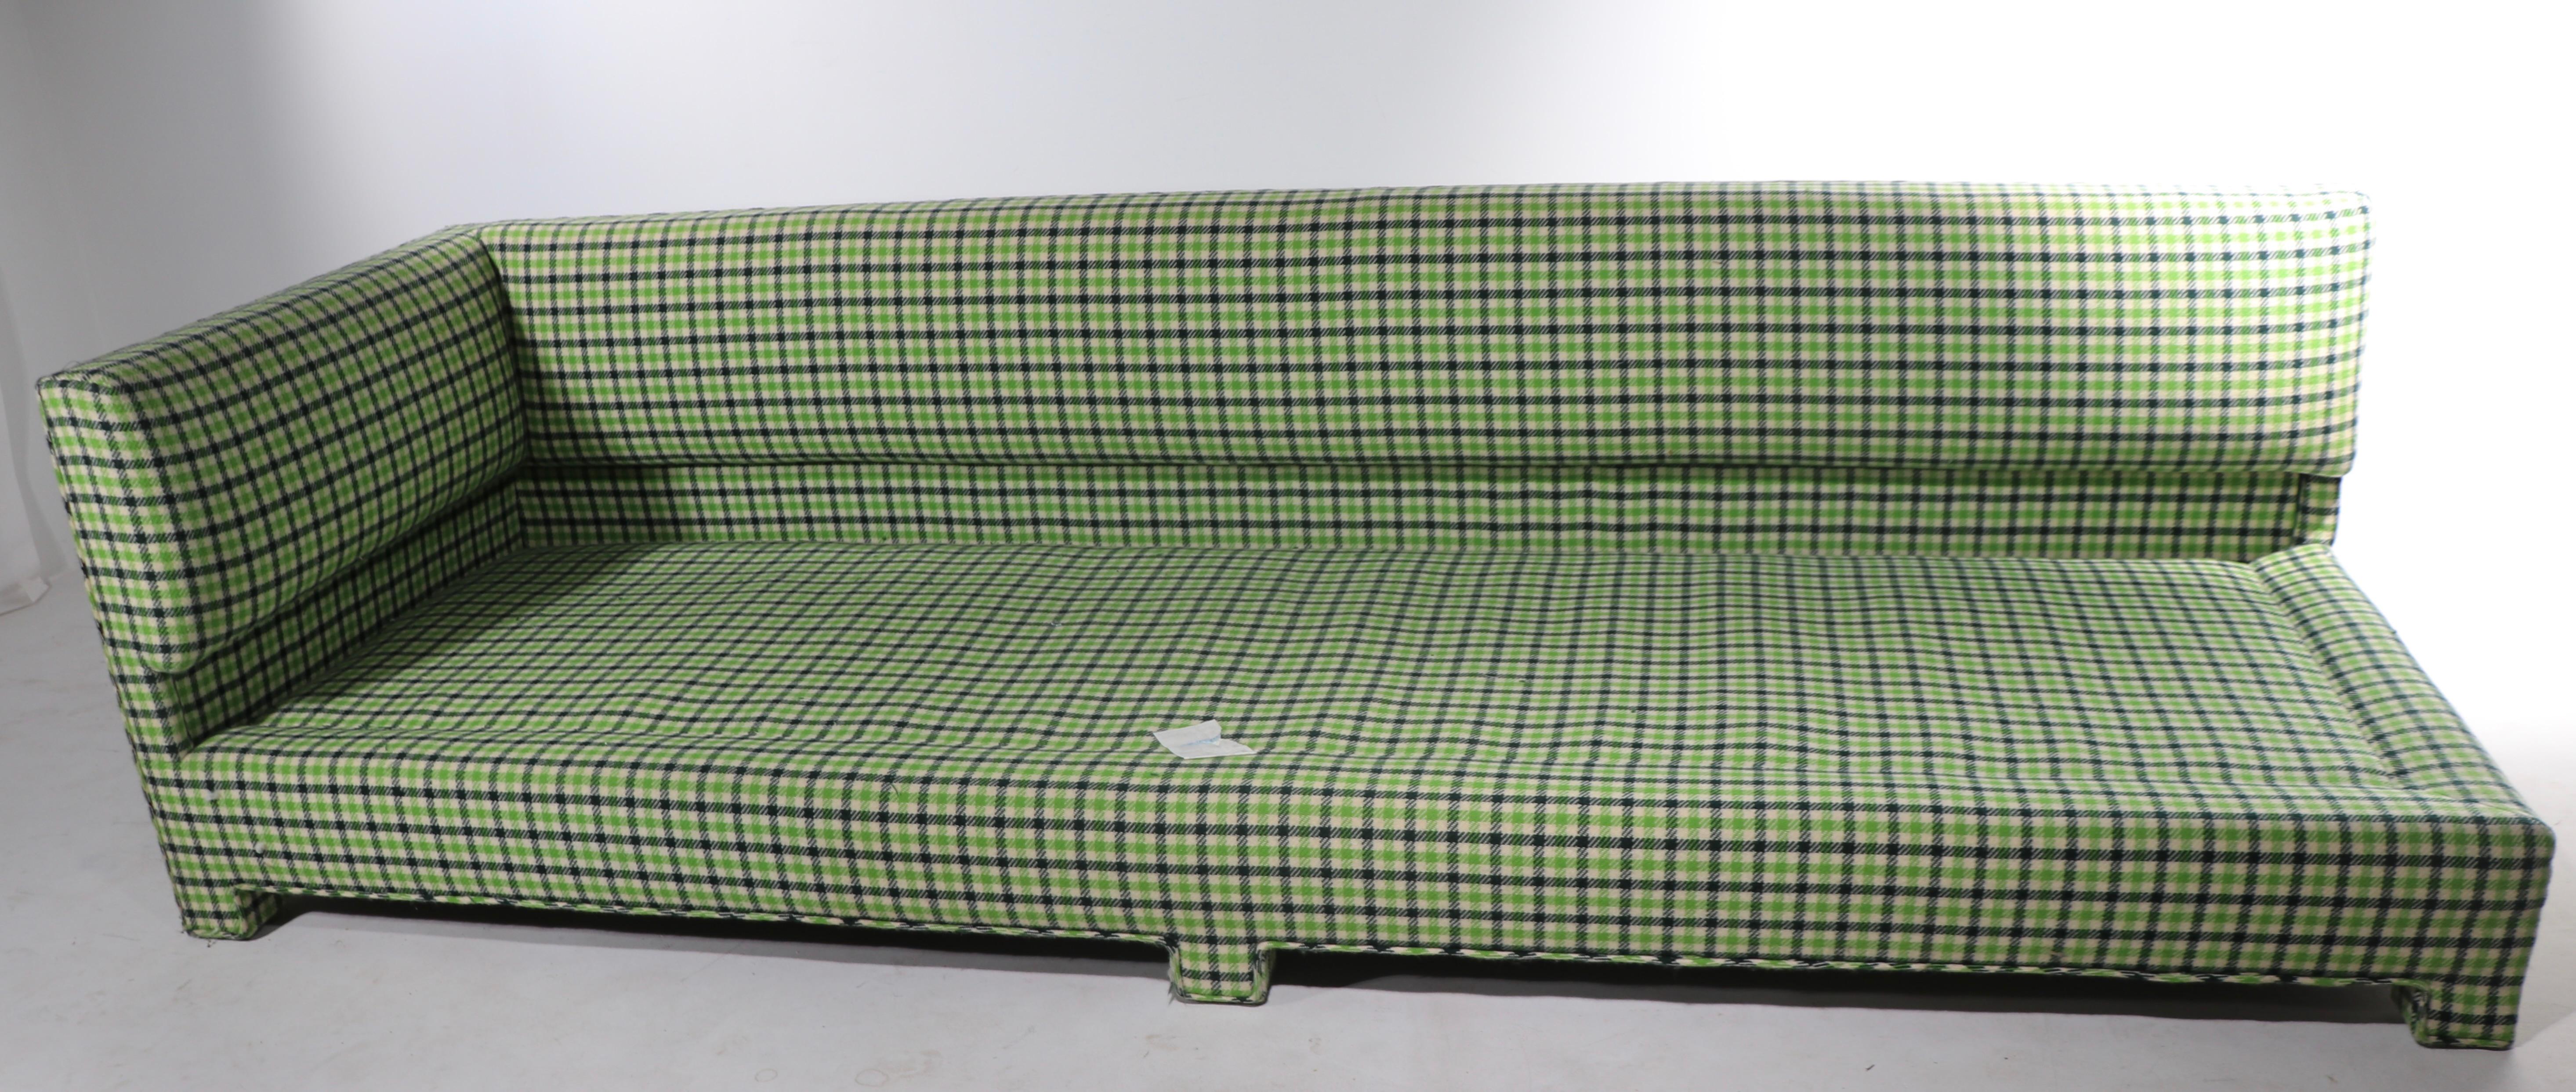 Late 20th Century Asymmetrical Postmodern Sofa by Thomas De Ángelis  For Sale